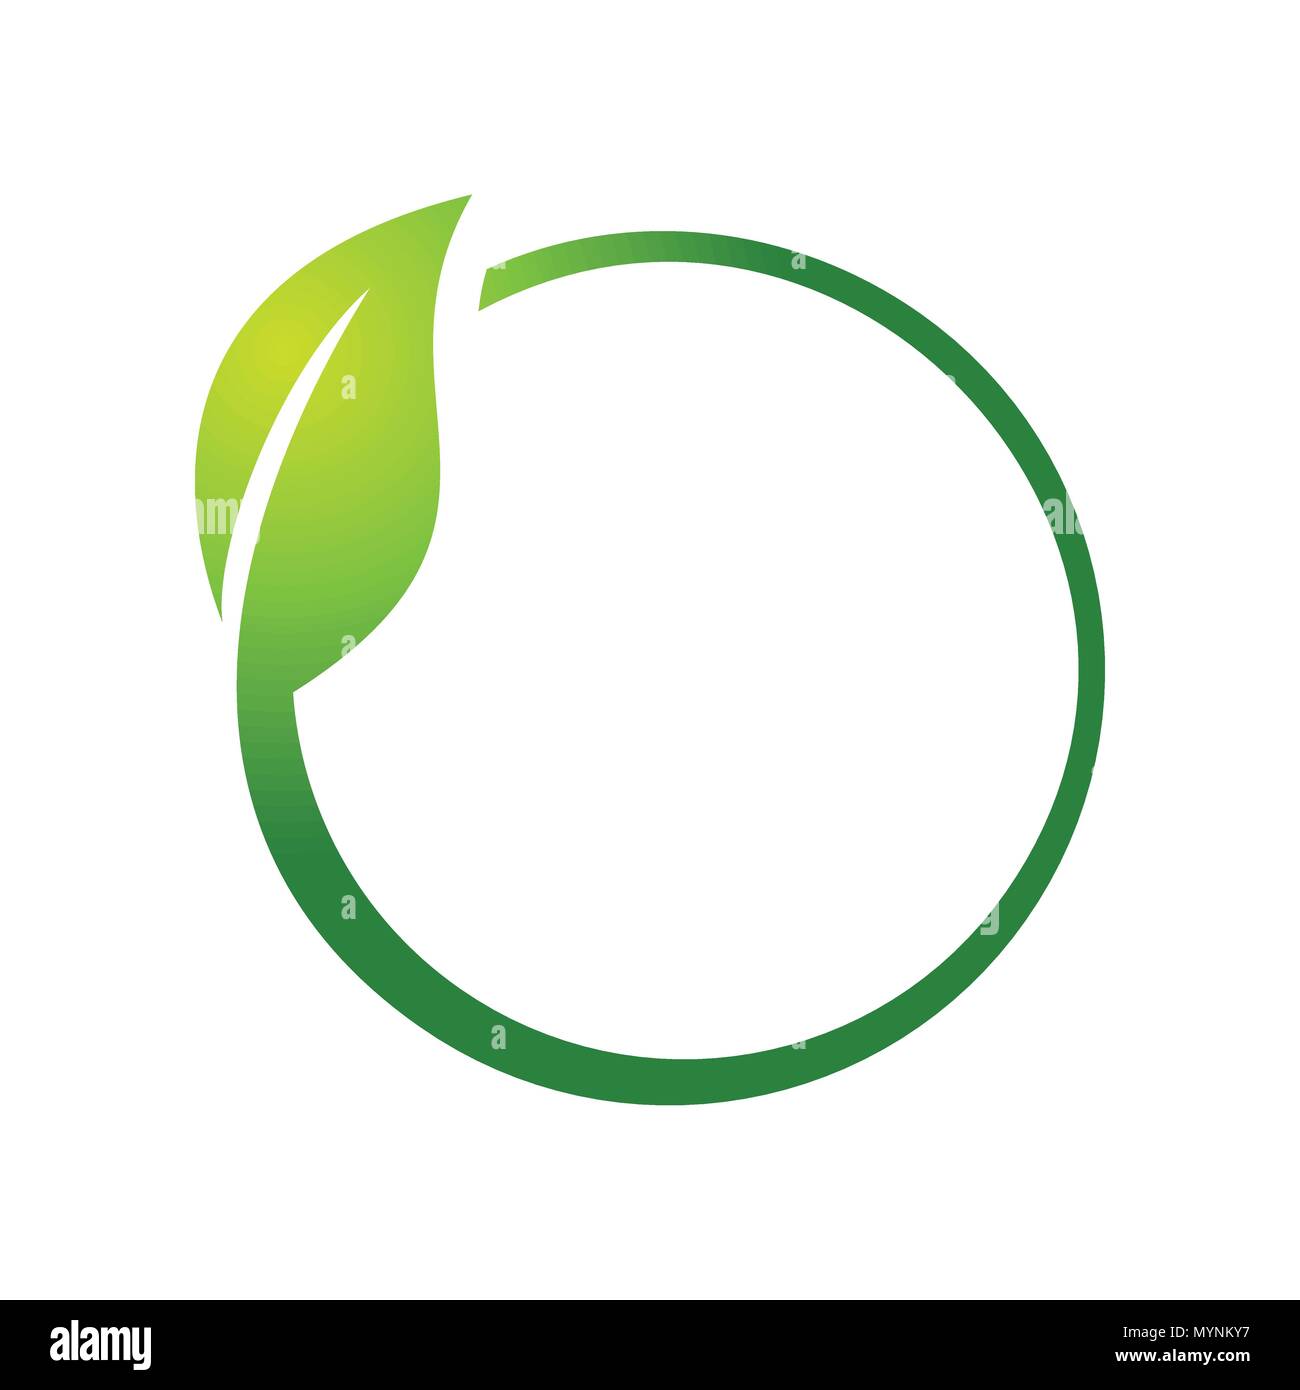 https://c8.alamy.com/comp/MYNKY7/eco-leaf-circle-vector-symbol-graphic-logo-design-template-MYNKY7.jpg